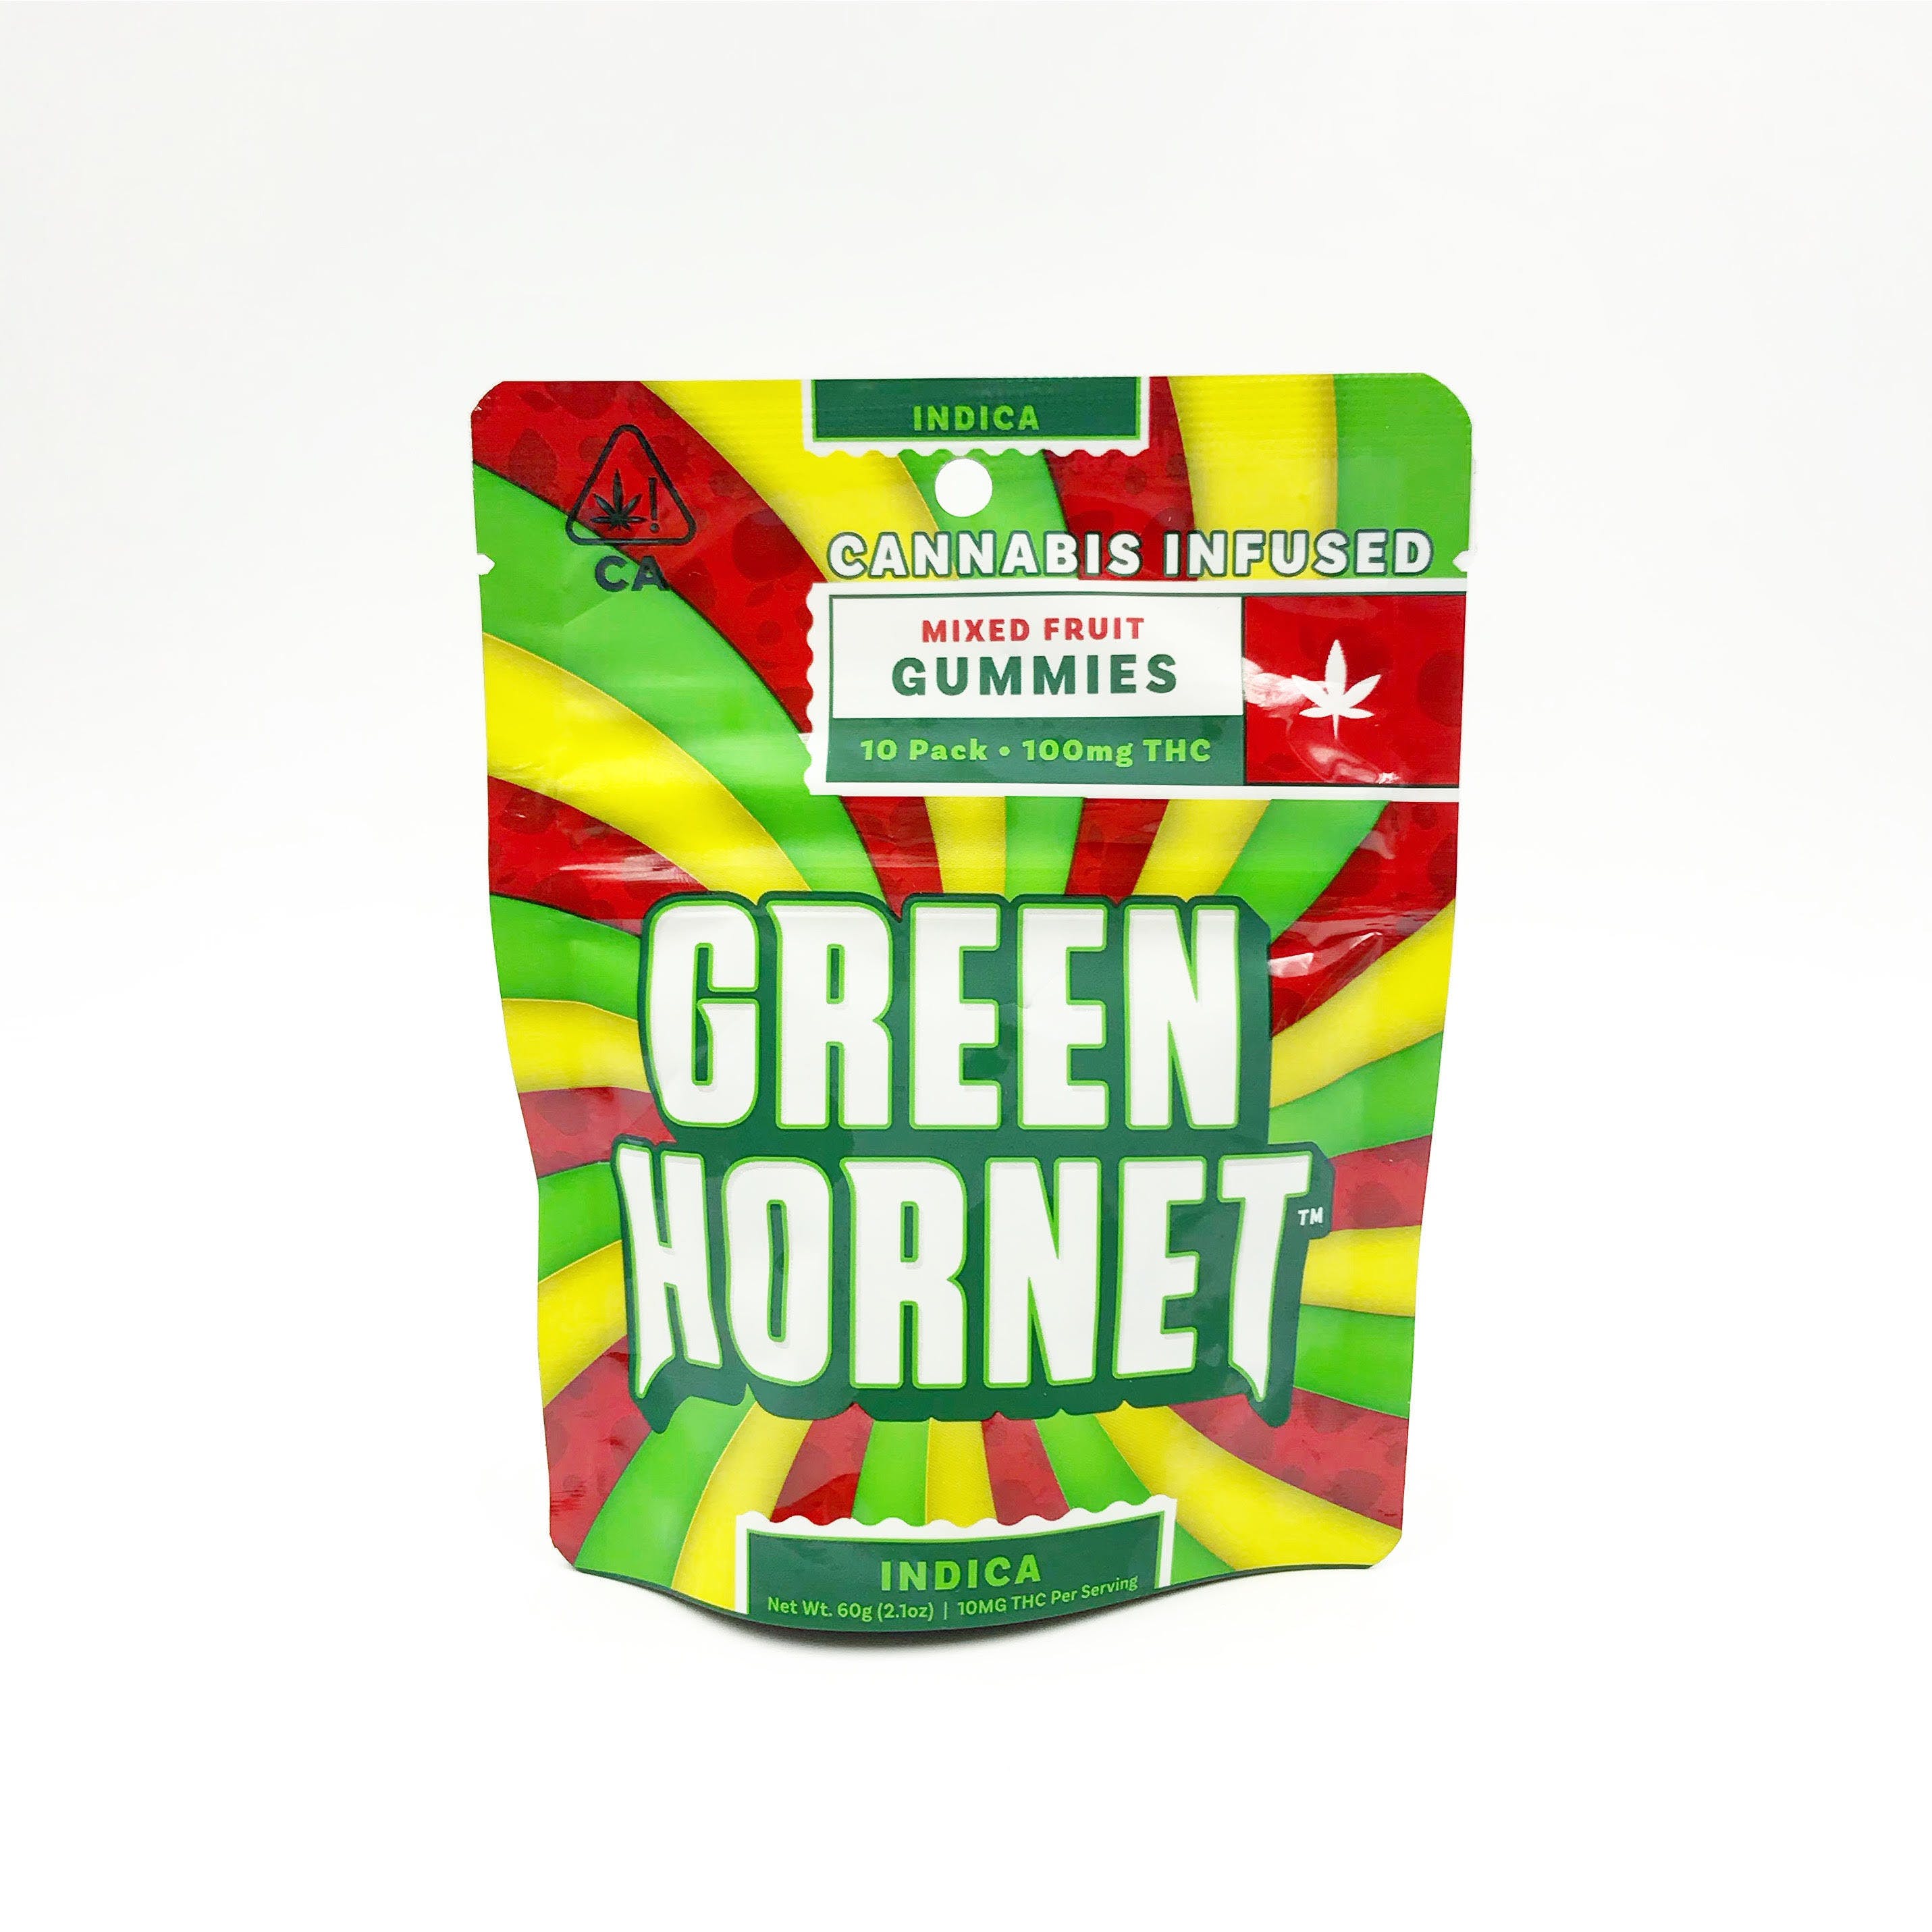 Cheeba Chews - Green Hornet Indica - Mixed Fruit, 100mg